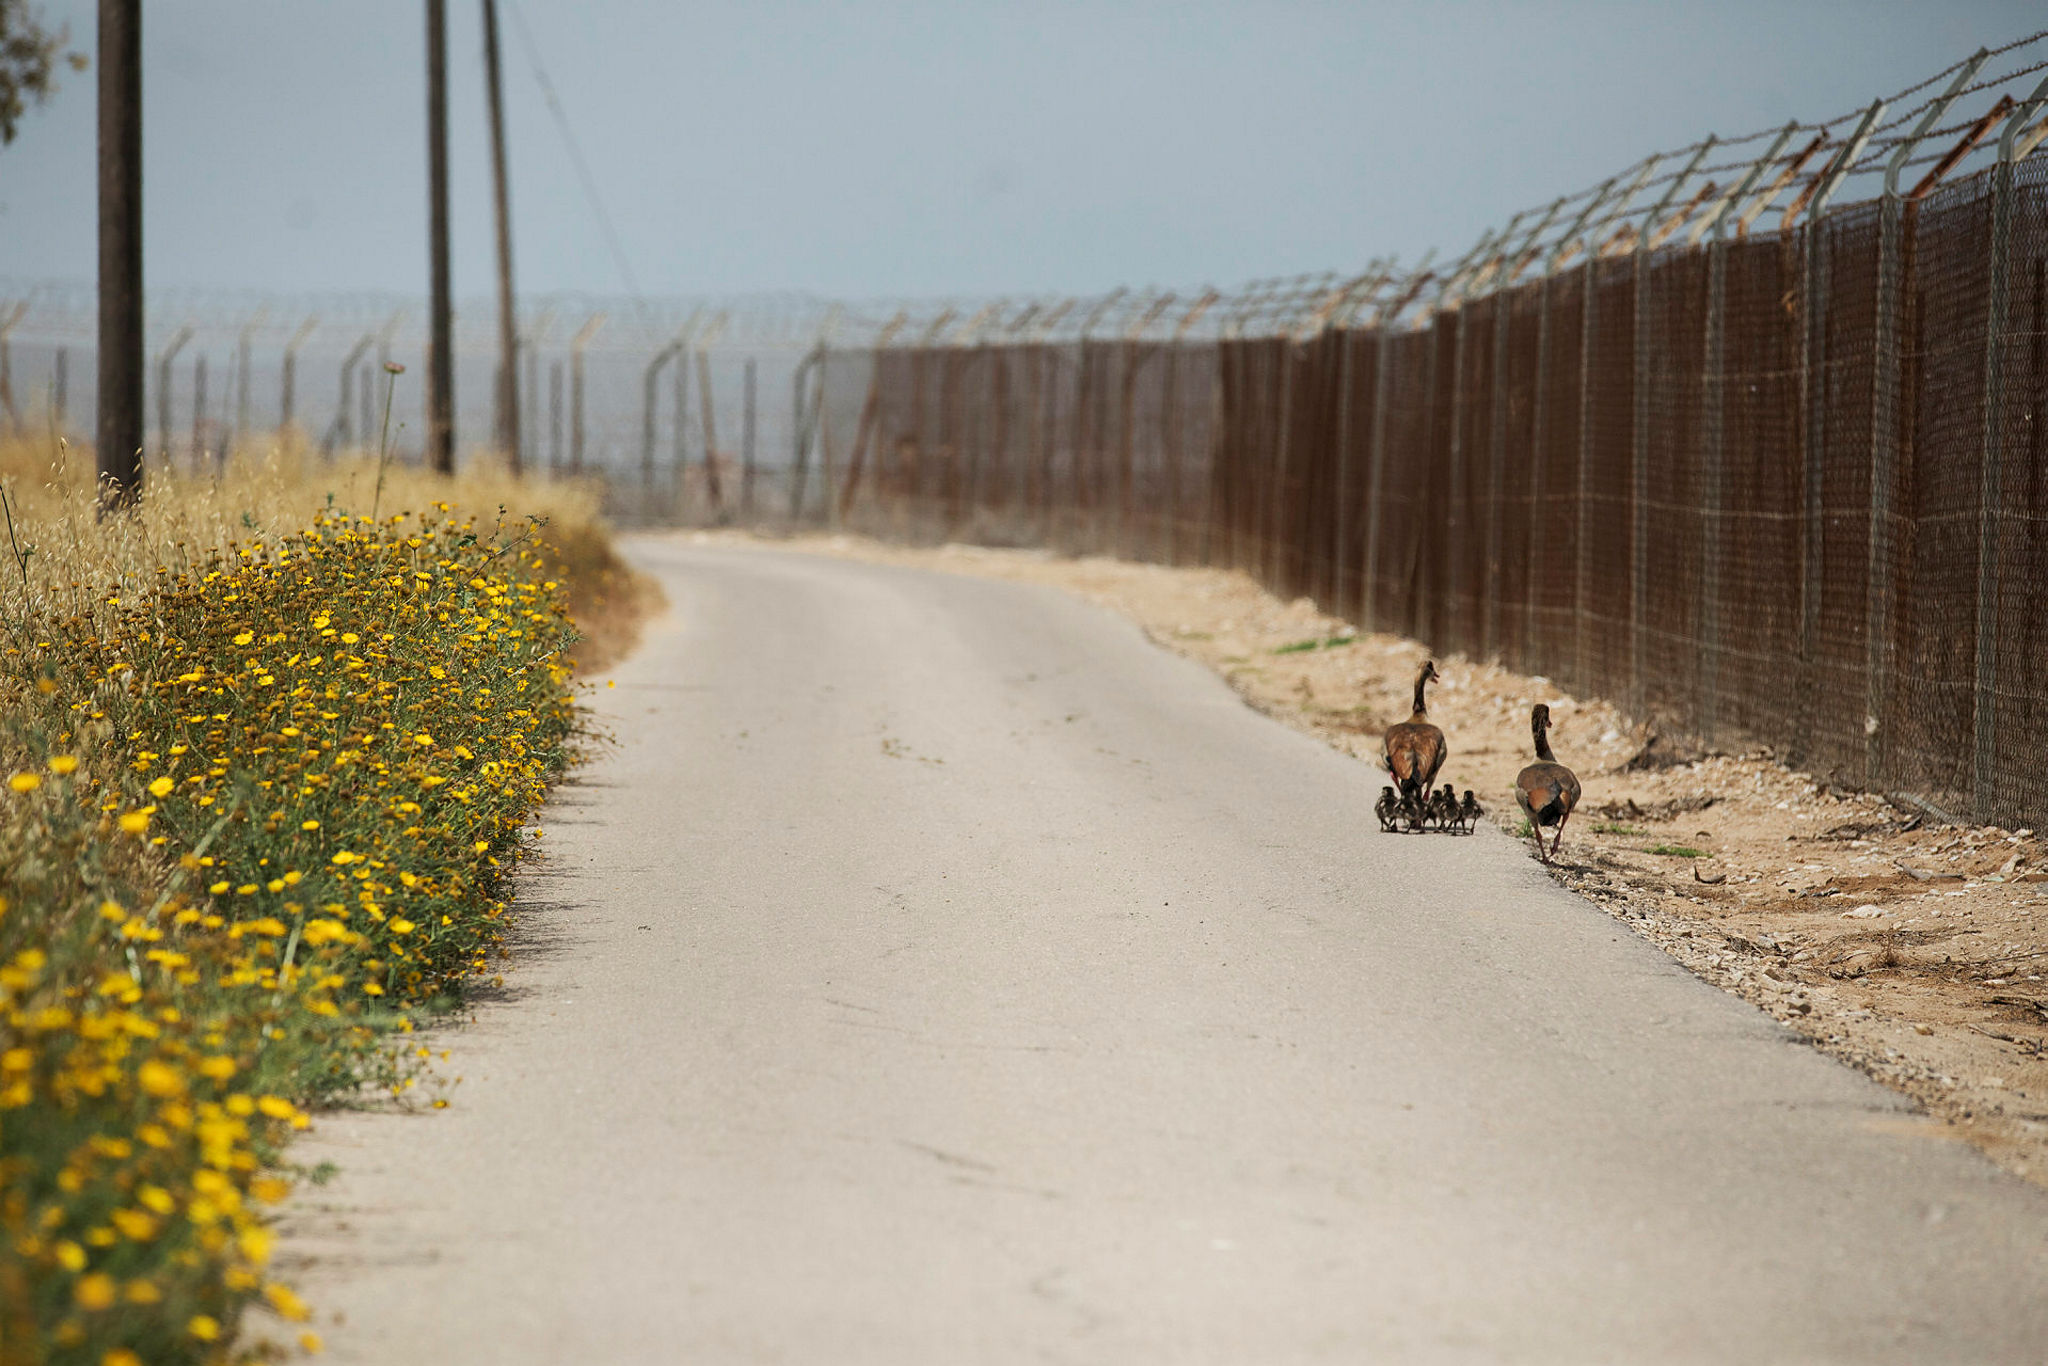 Alertness on the border of Gaza and Israel